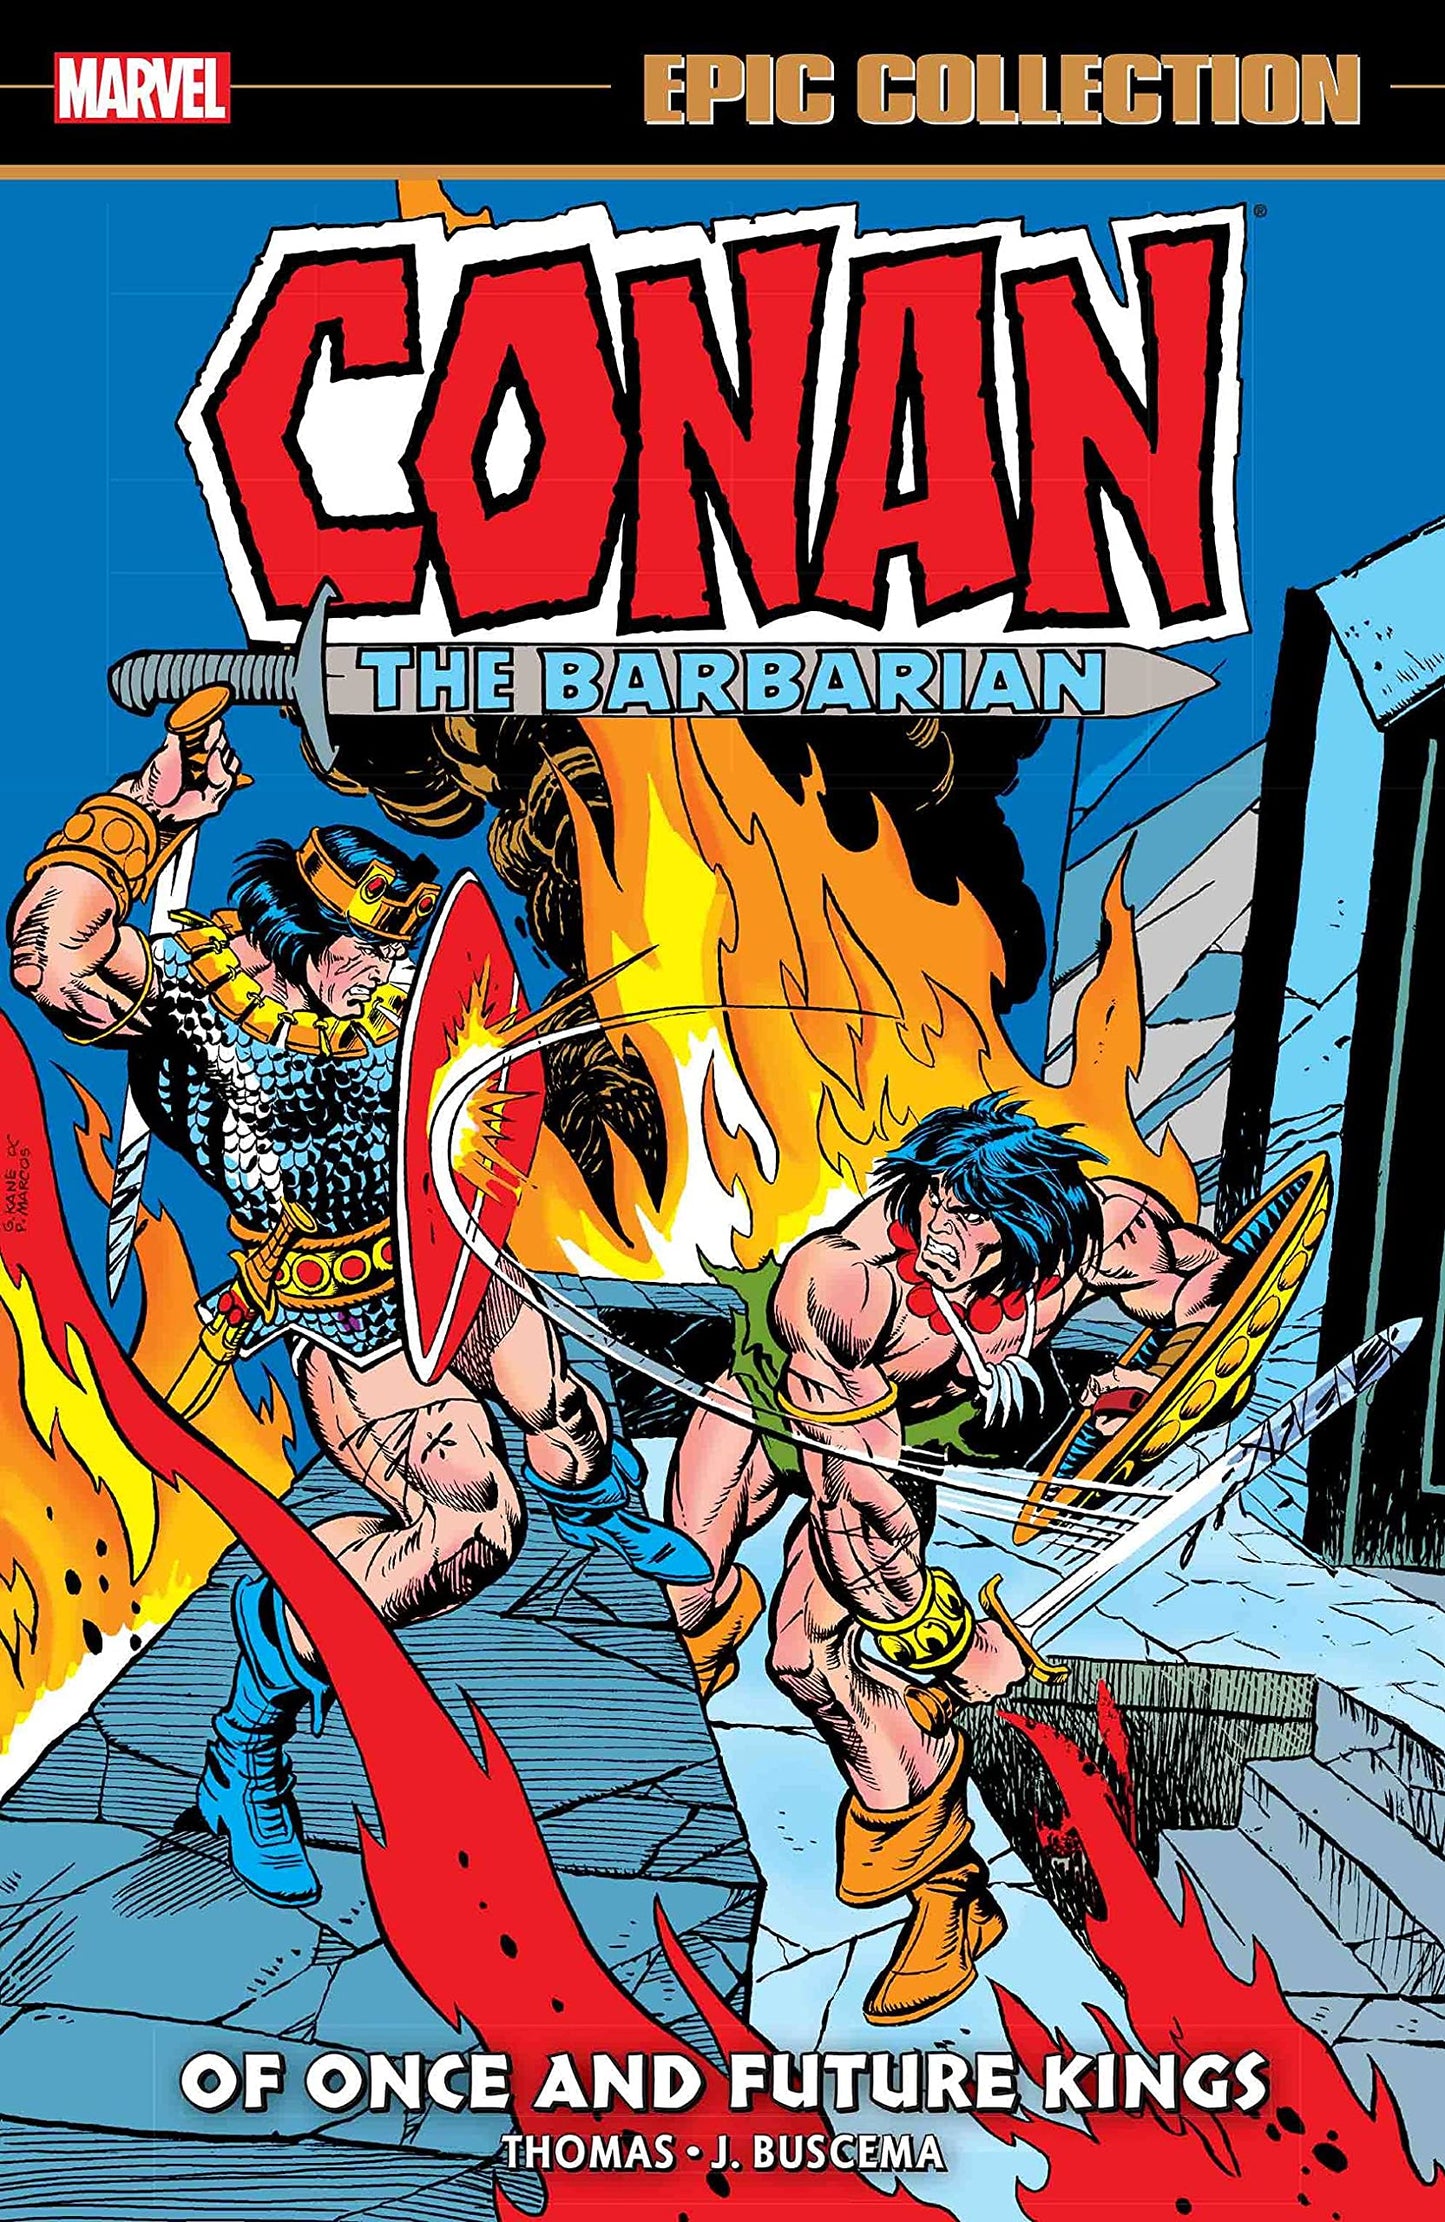 conan, marvel comics, marvel epic collection, Marvel graphic novel - Best Books